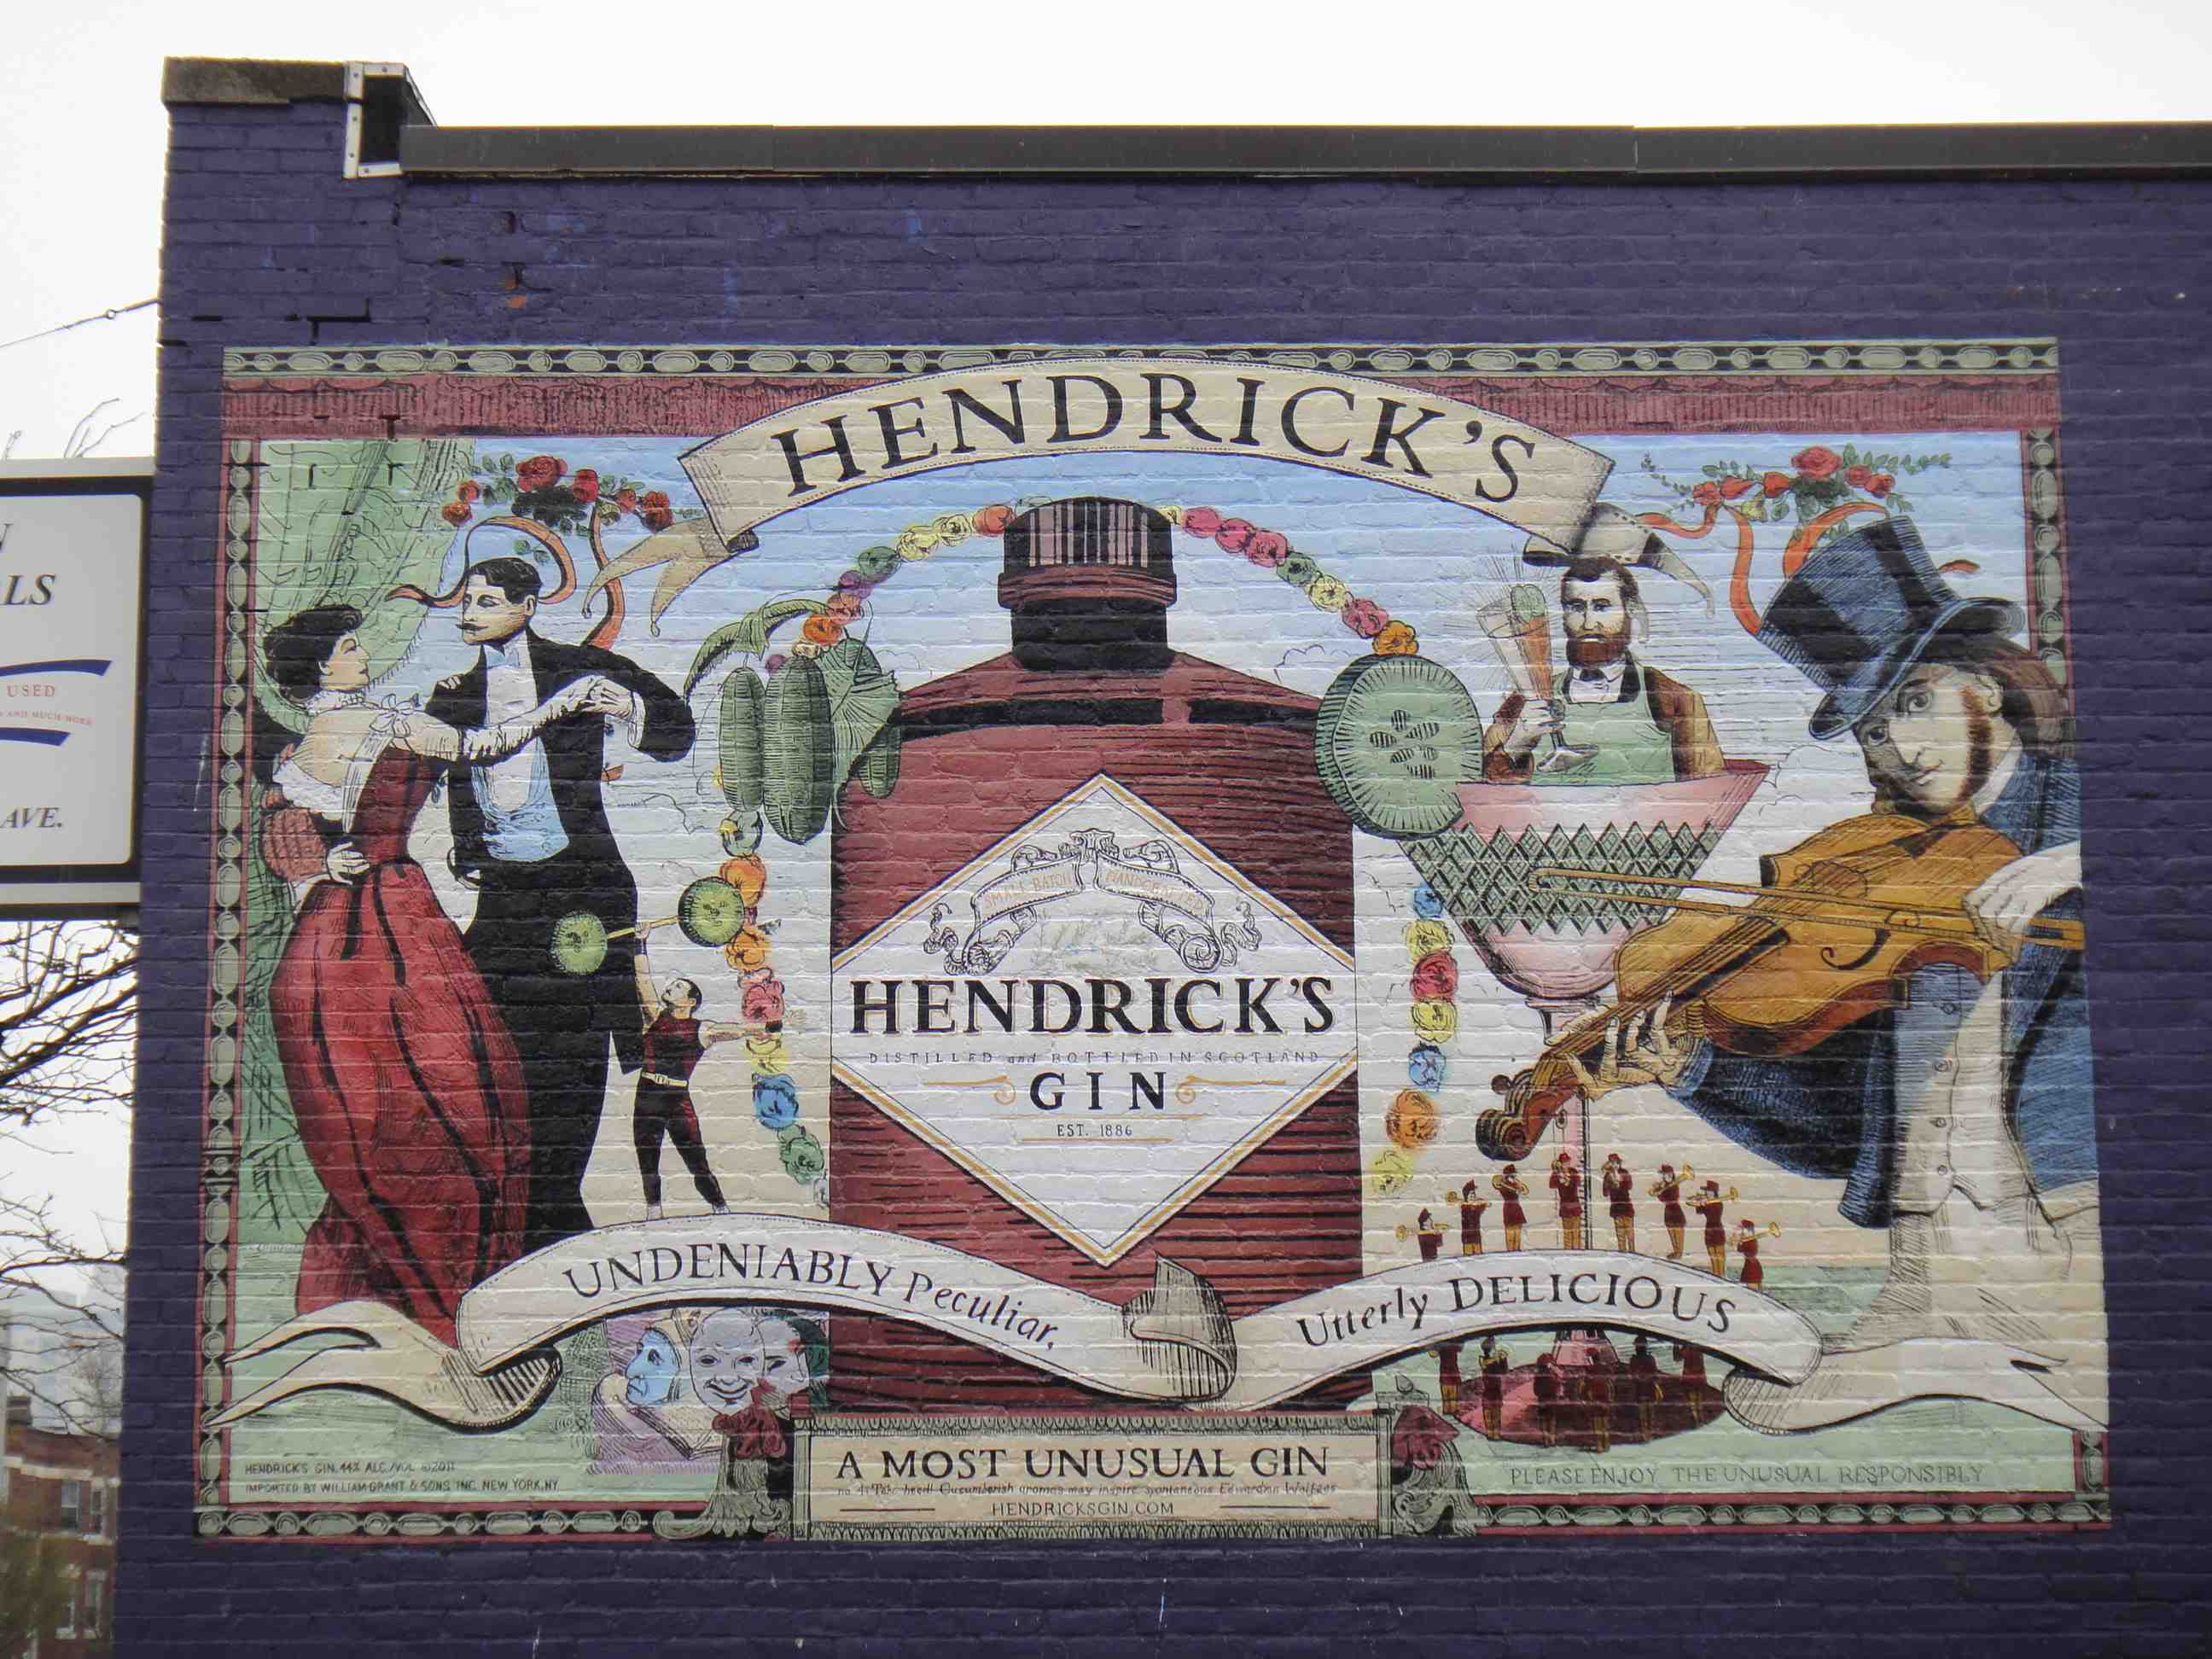 HENDRICK’S-ი — ყველაზე არასტანდარტული ჯინი, ანუ რა კავშირია ვარდსა და კიტრს შორის